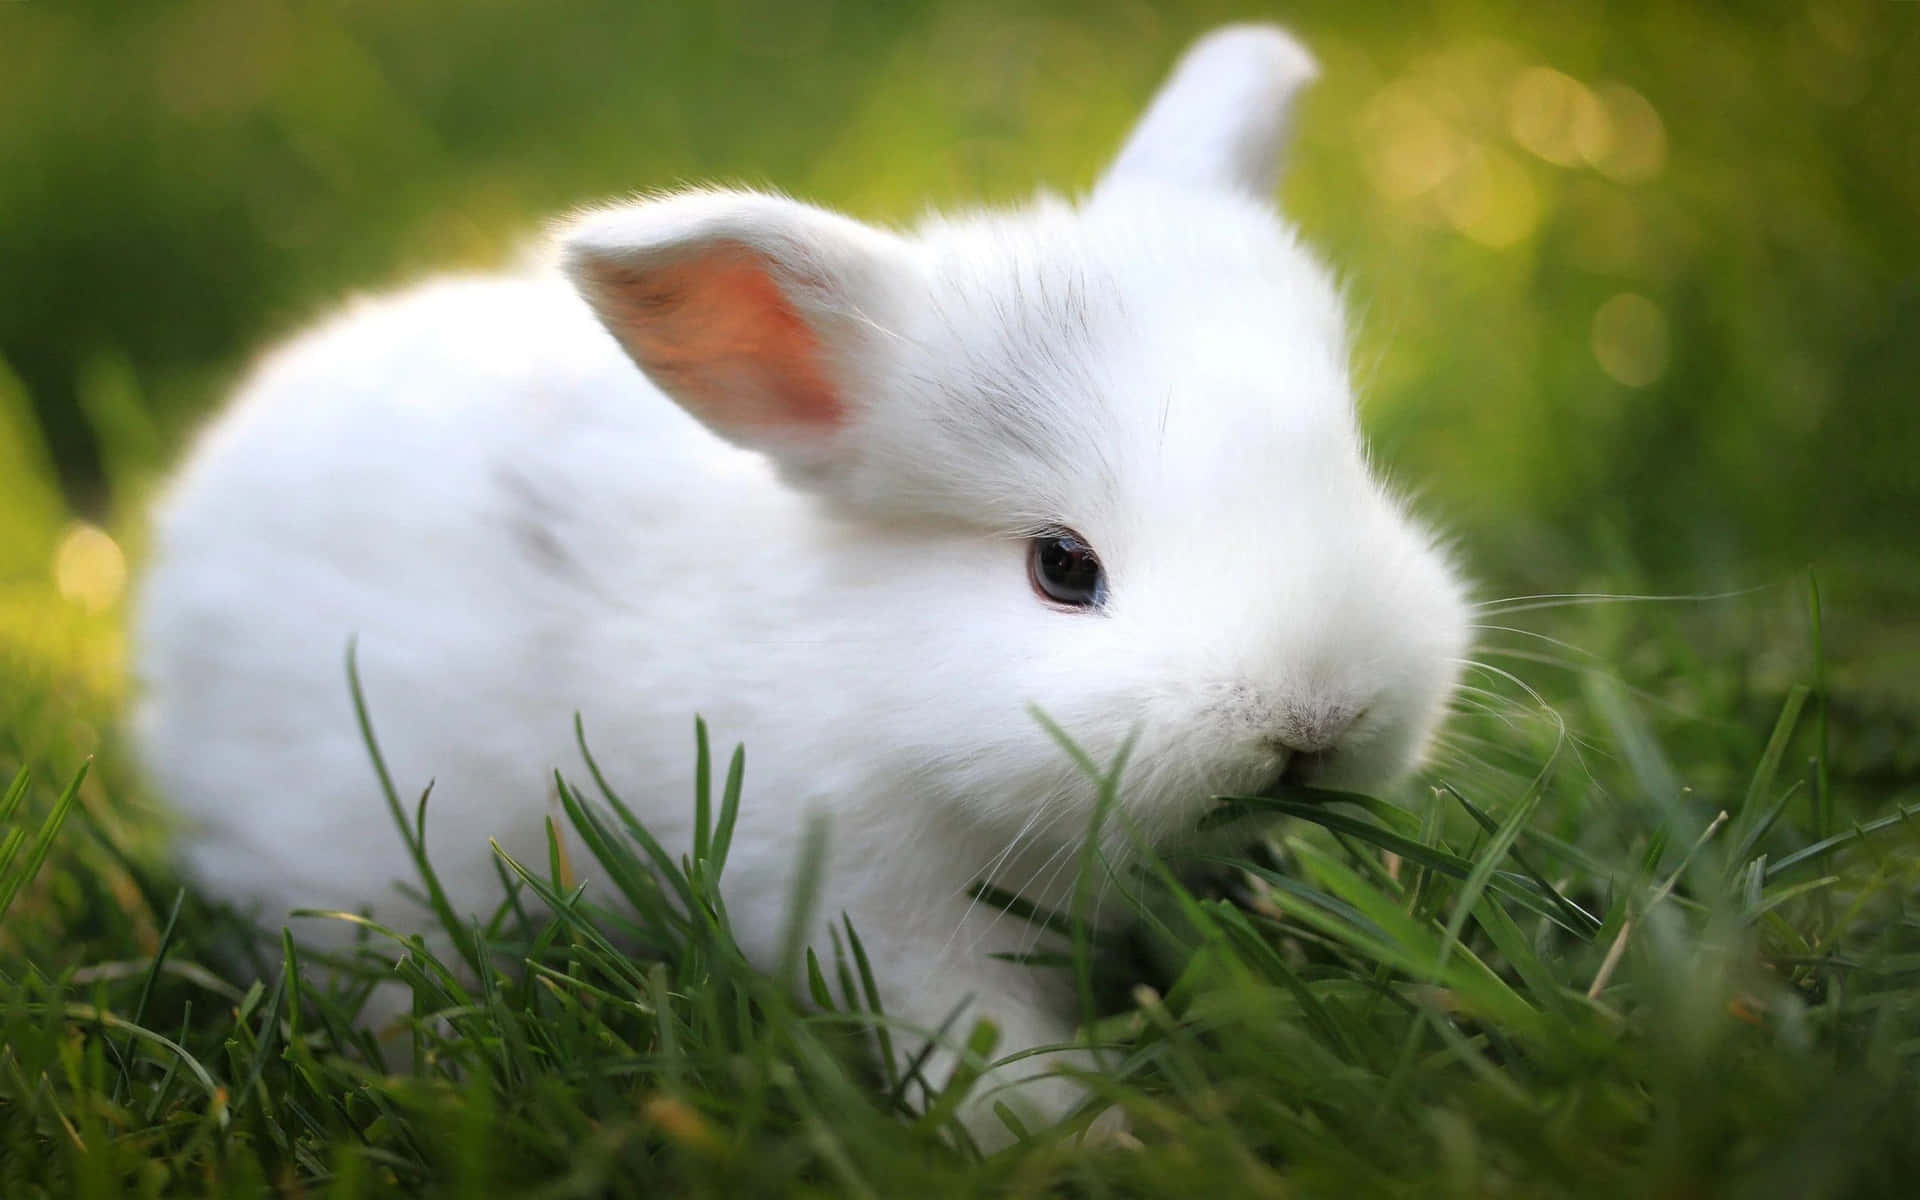 A beautiful white rabbit hopping through a grassy field